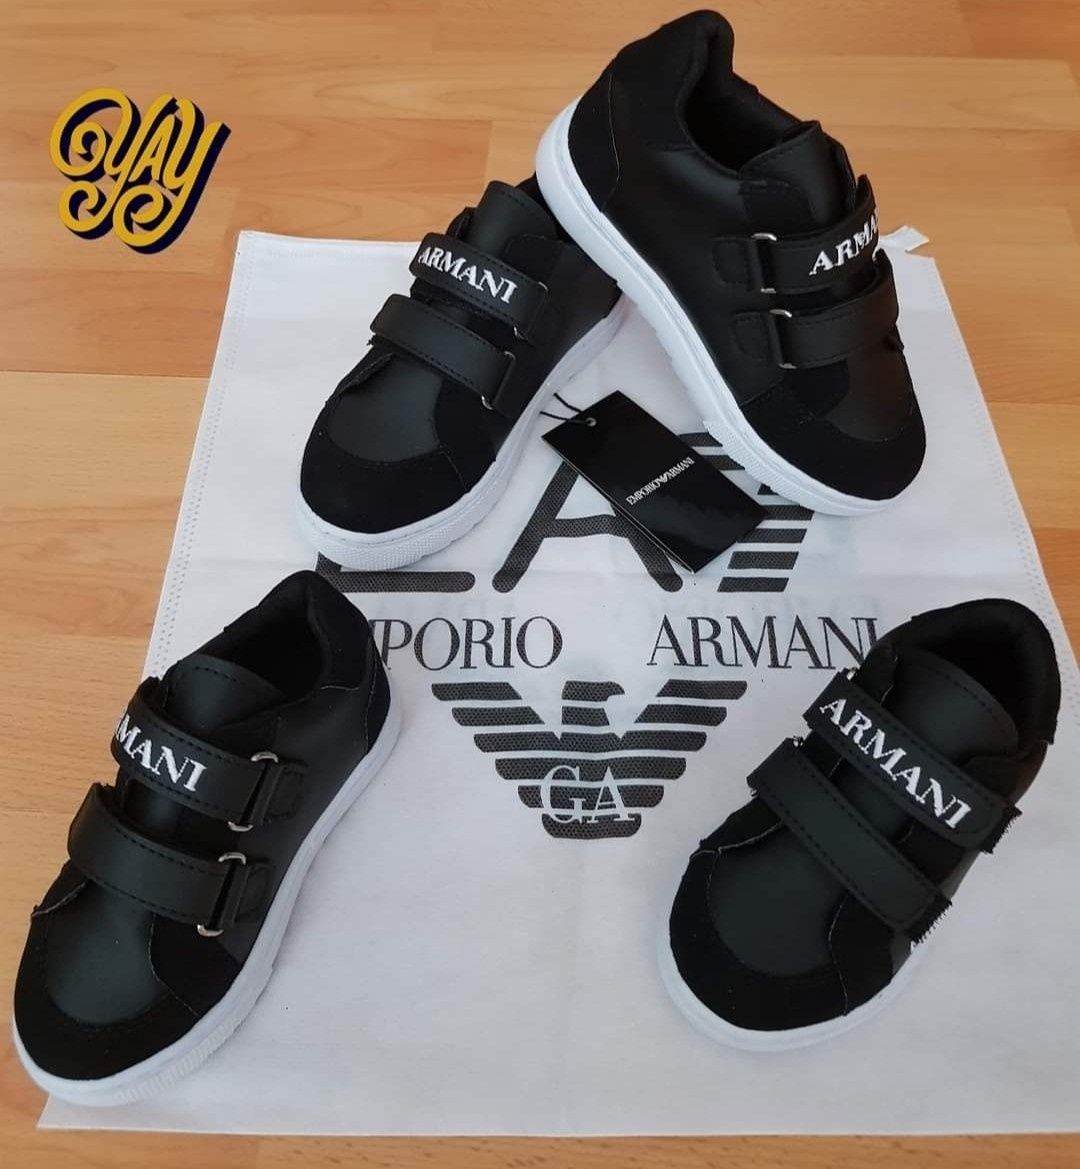 Adidasi Armani copii,new model, logo brodat